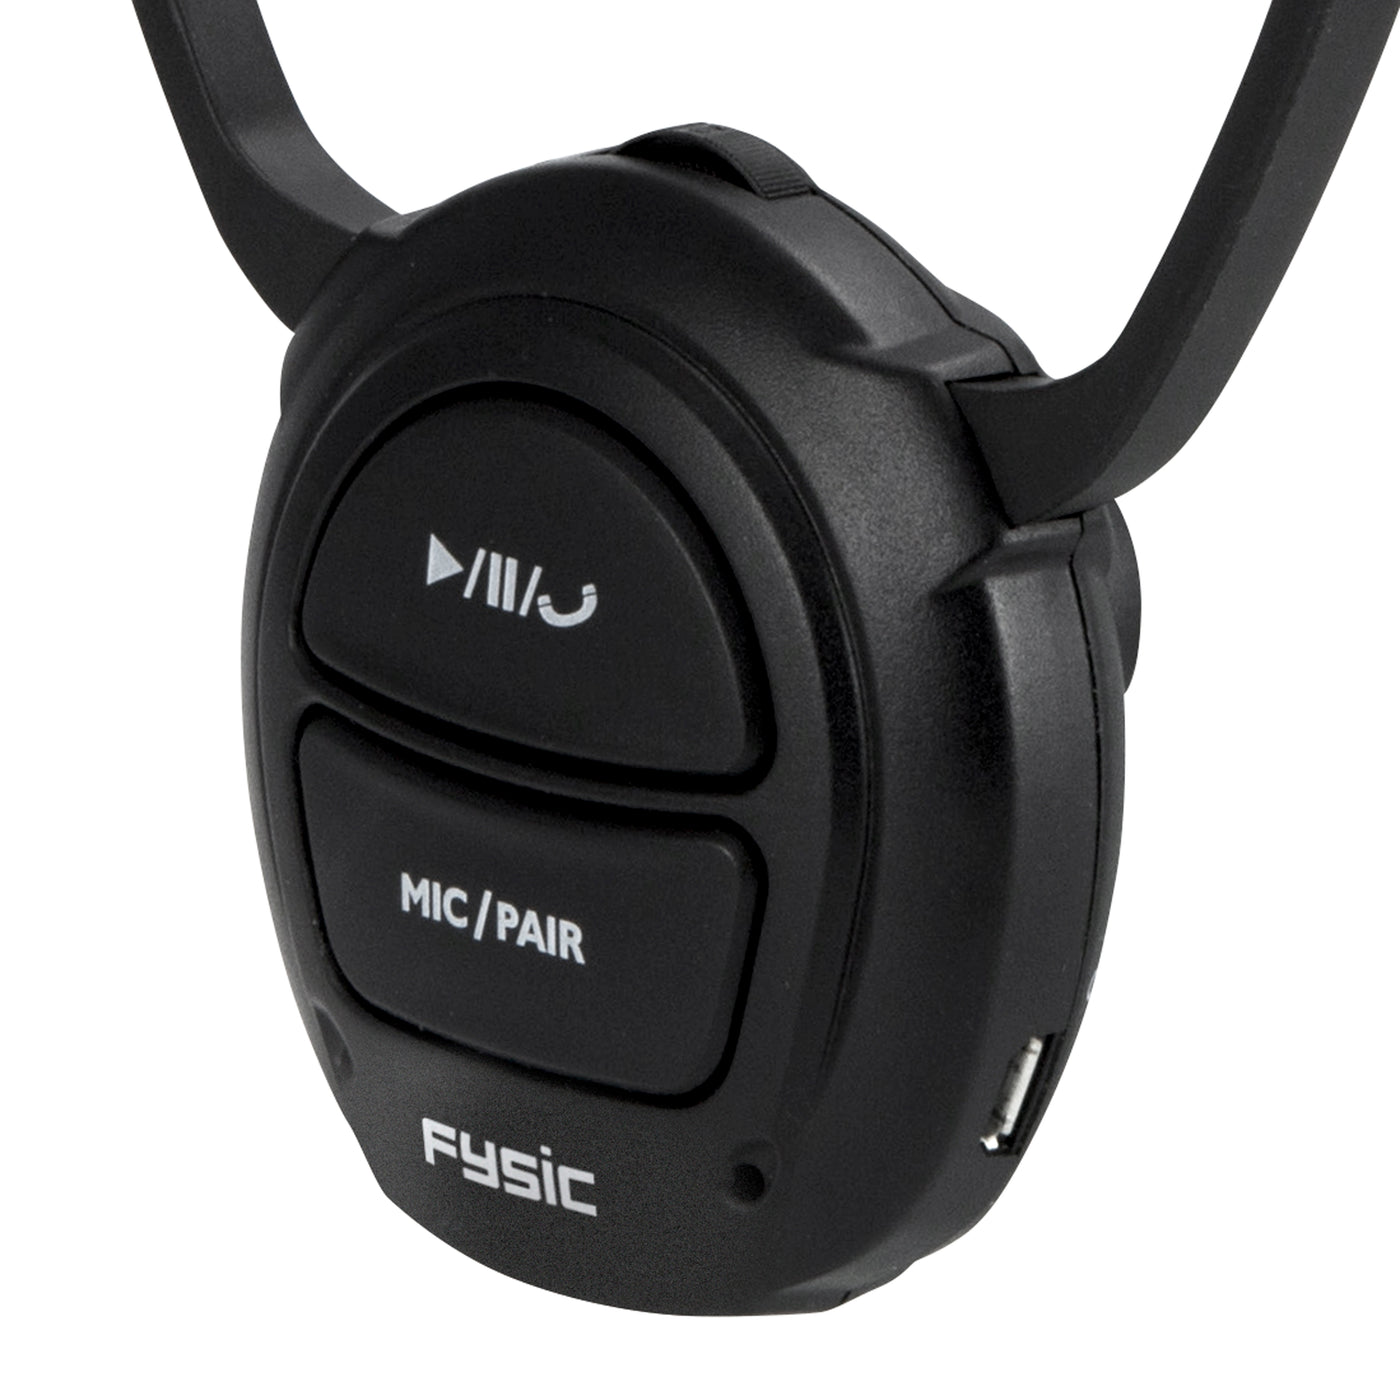 Fysic FH-76 - Draadloze gehoorversterker/hoofdtelefoon